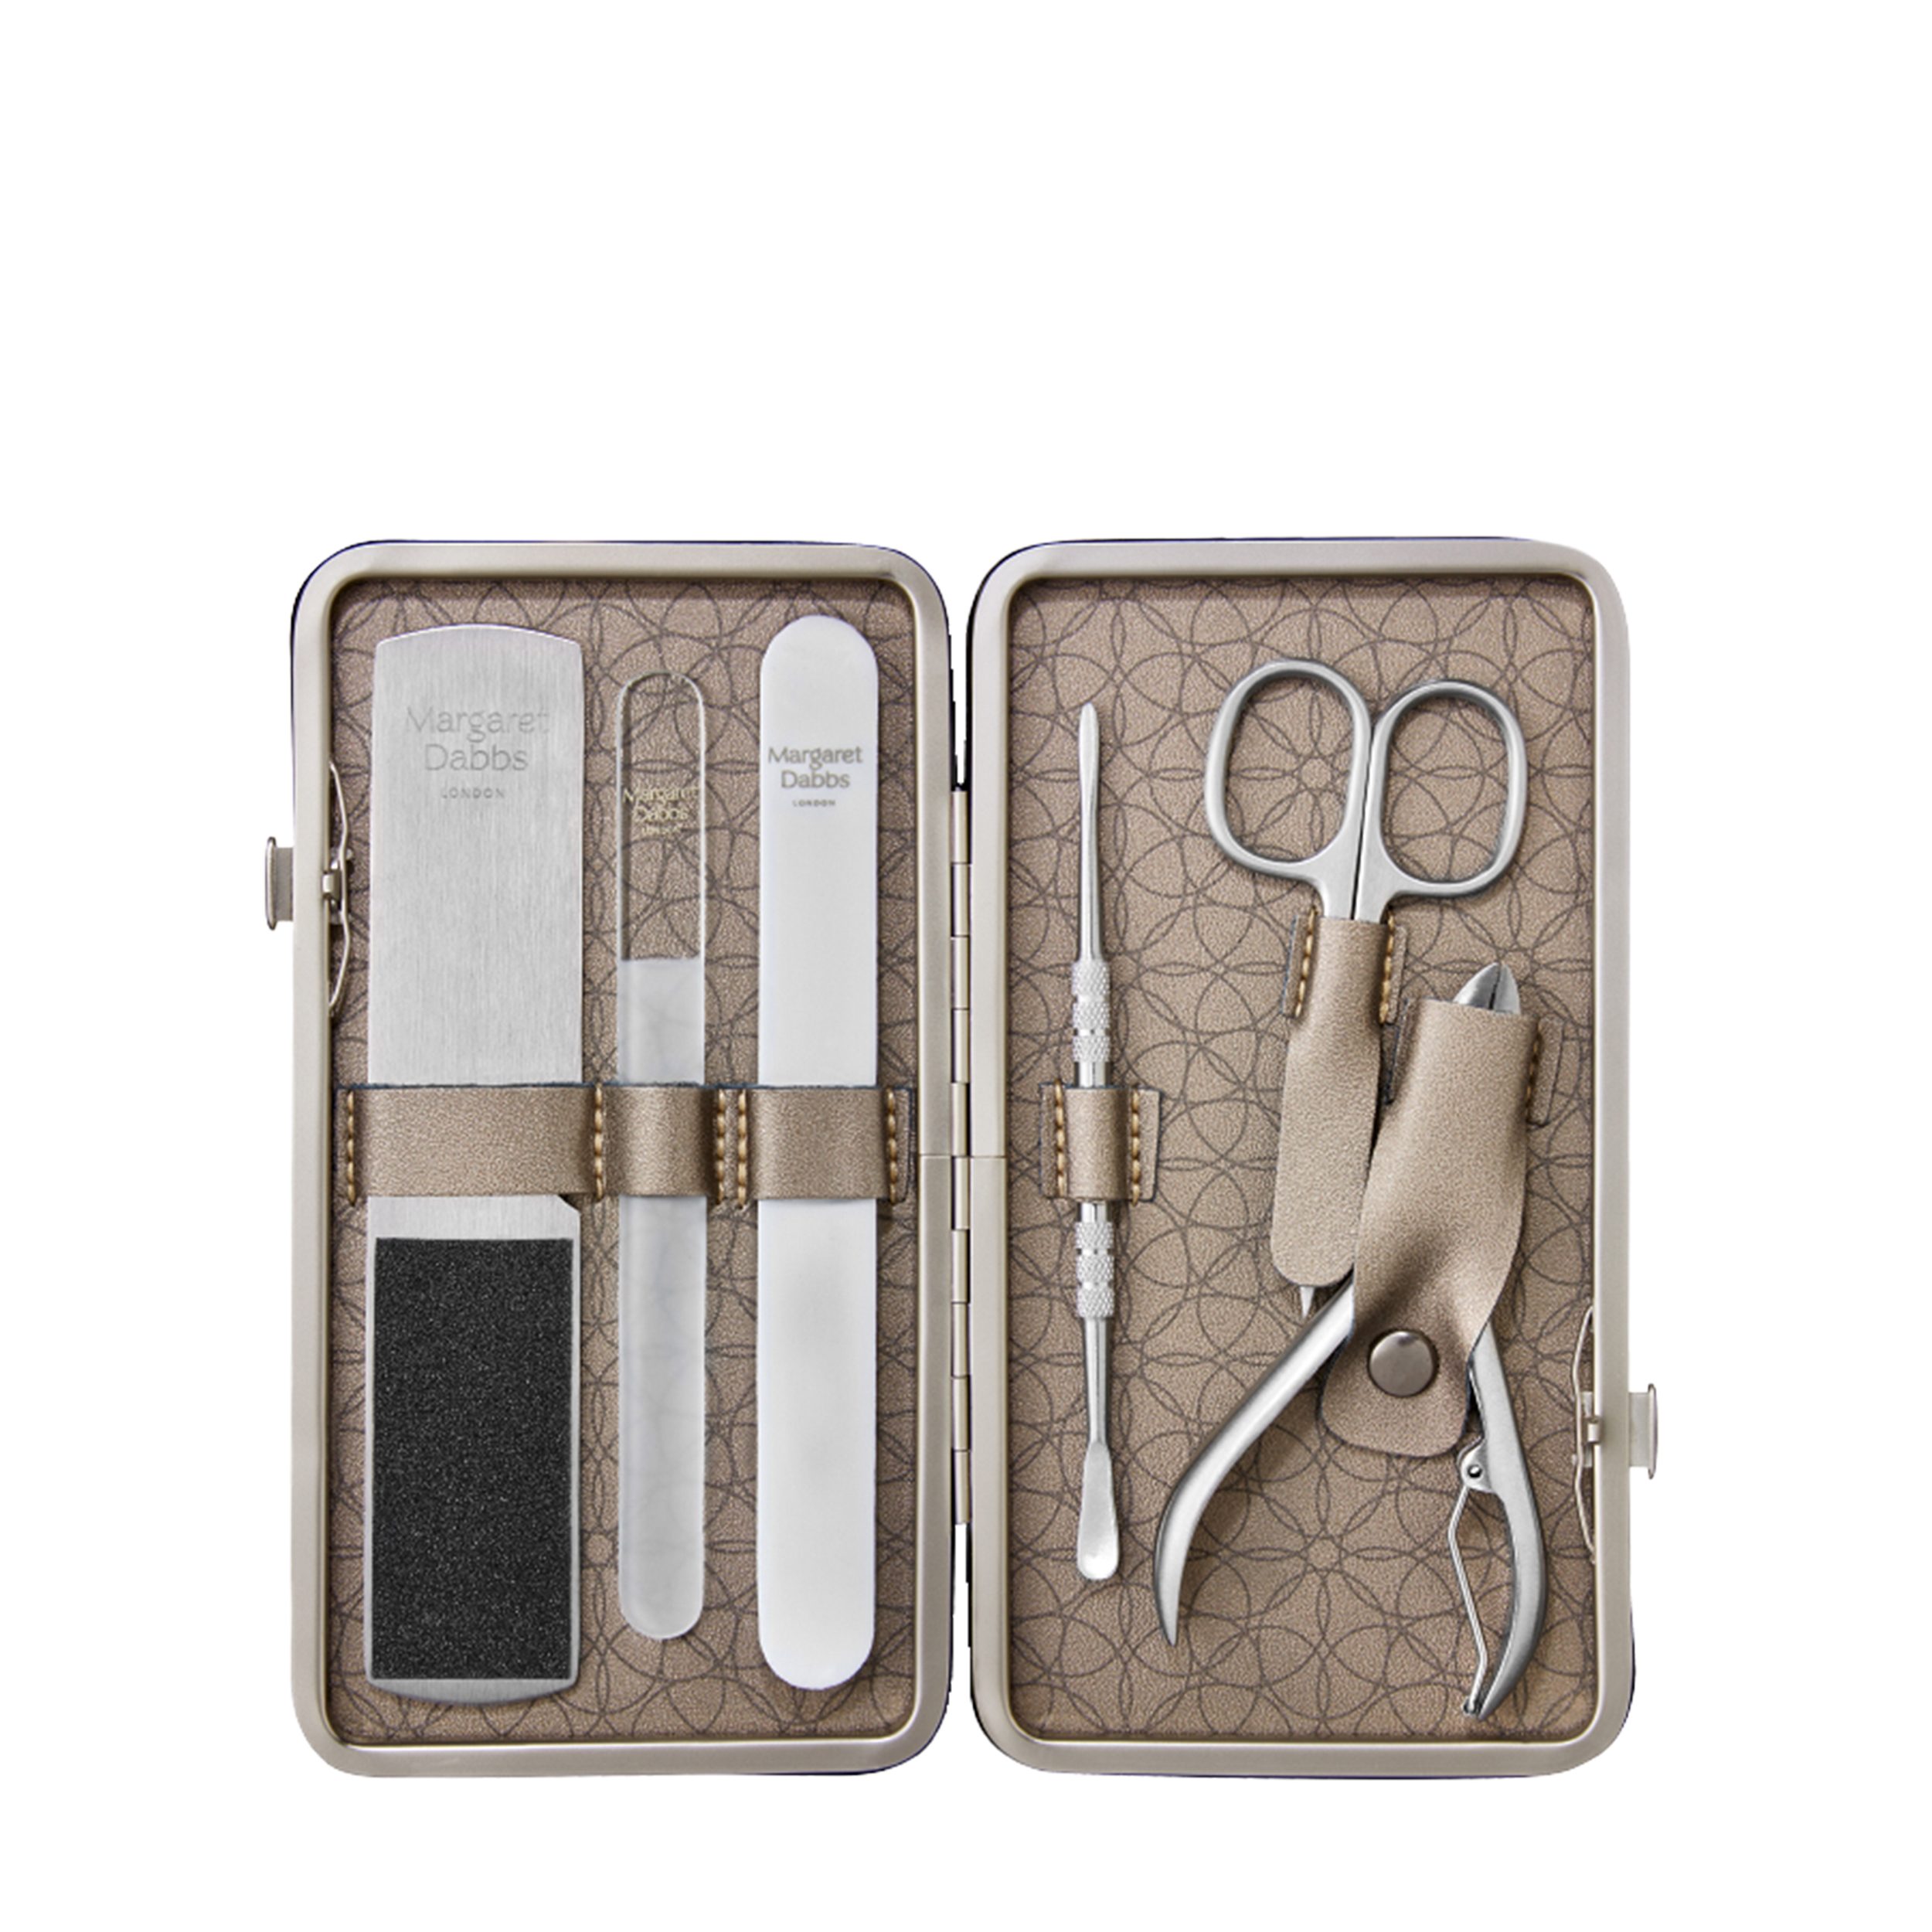 Margaret Dabbs London Набор инструментов для маникюра и педикюра Manicure & Pedicure Set